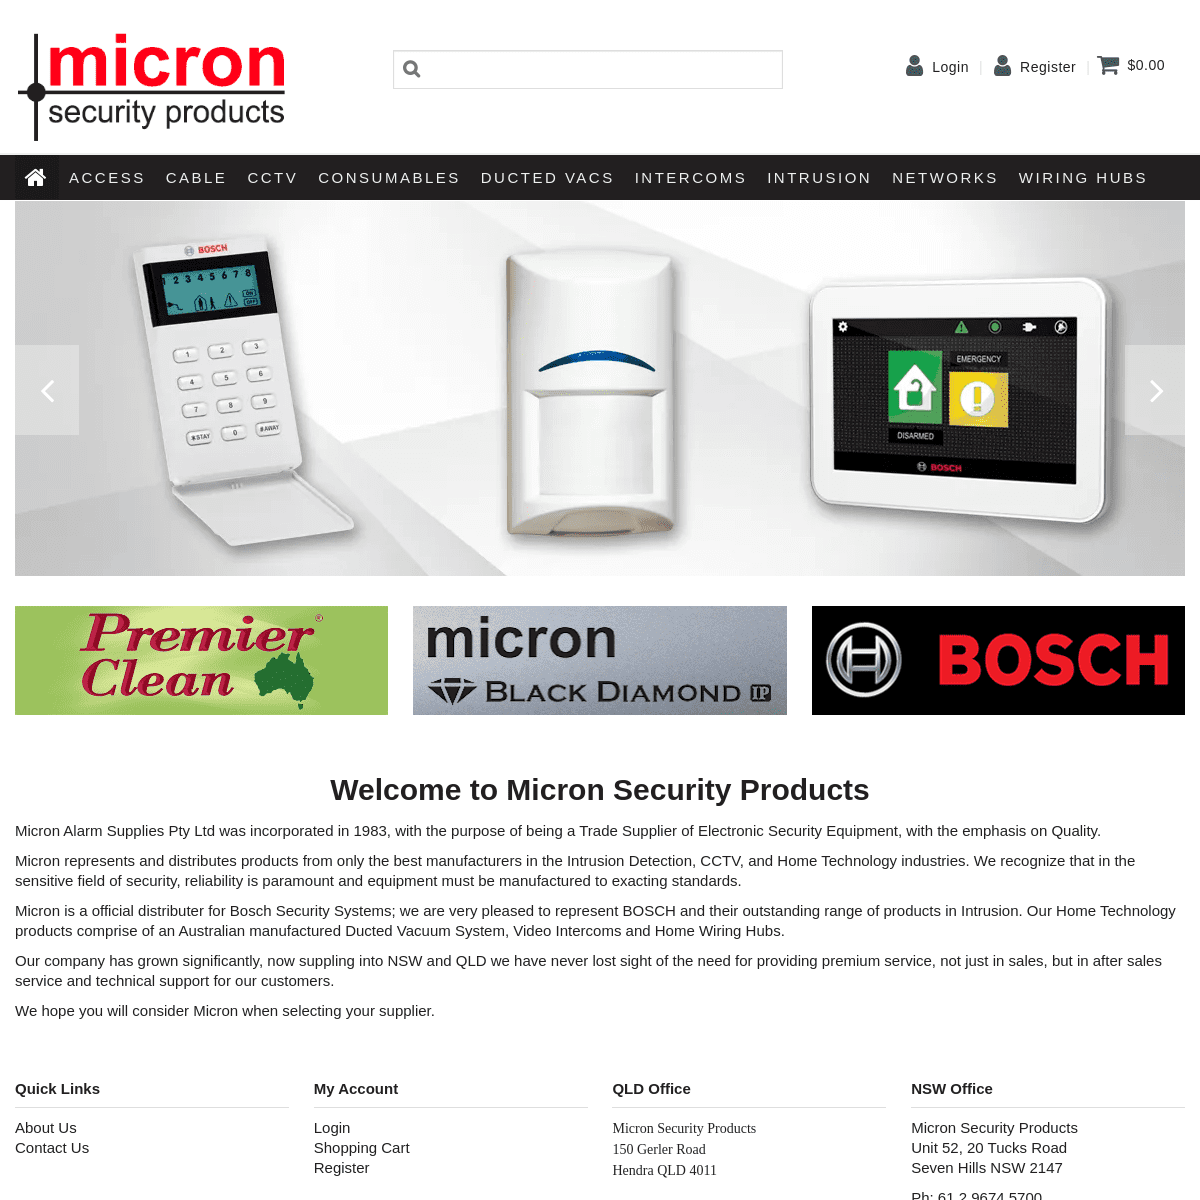 A complete backup of micronalarms.com.au